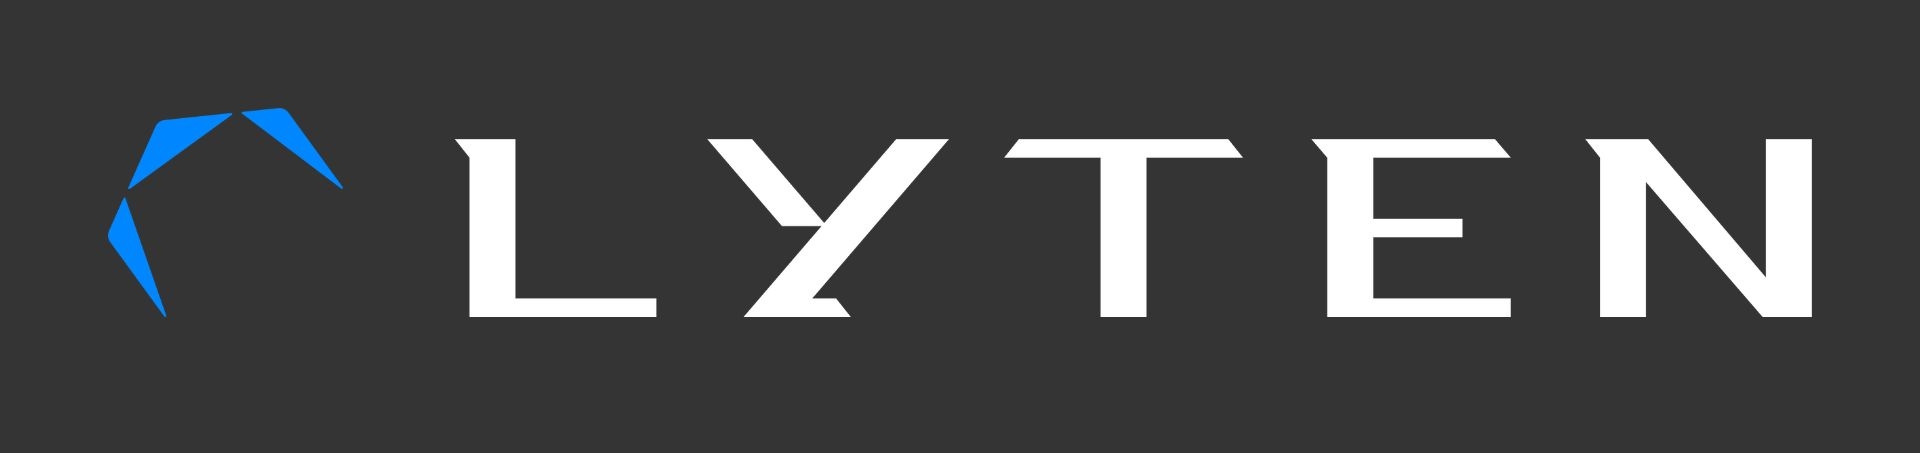 Lyten, Inc.